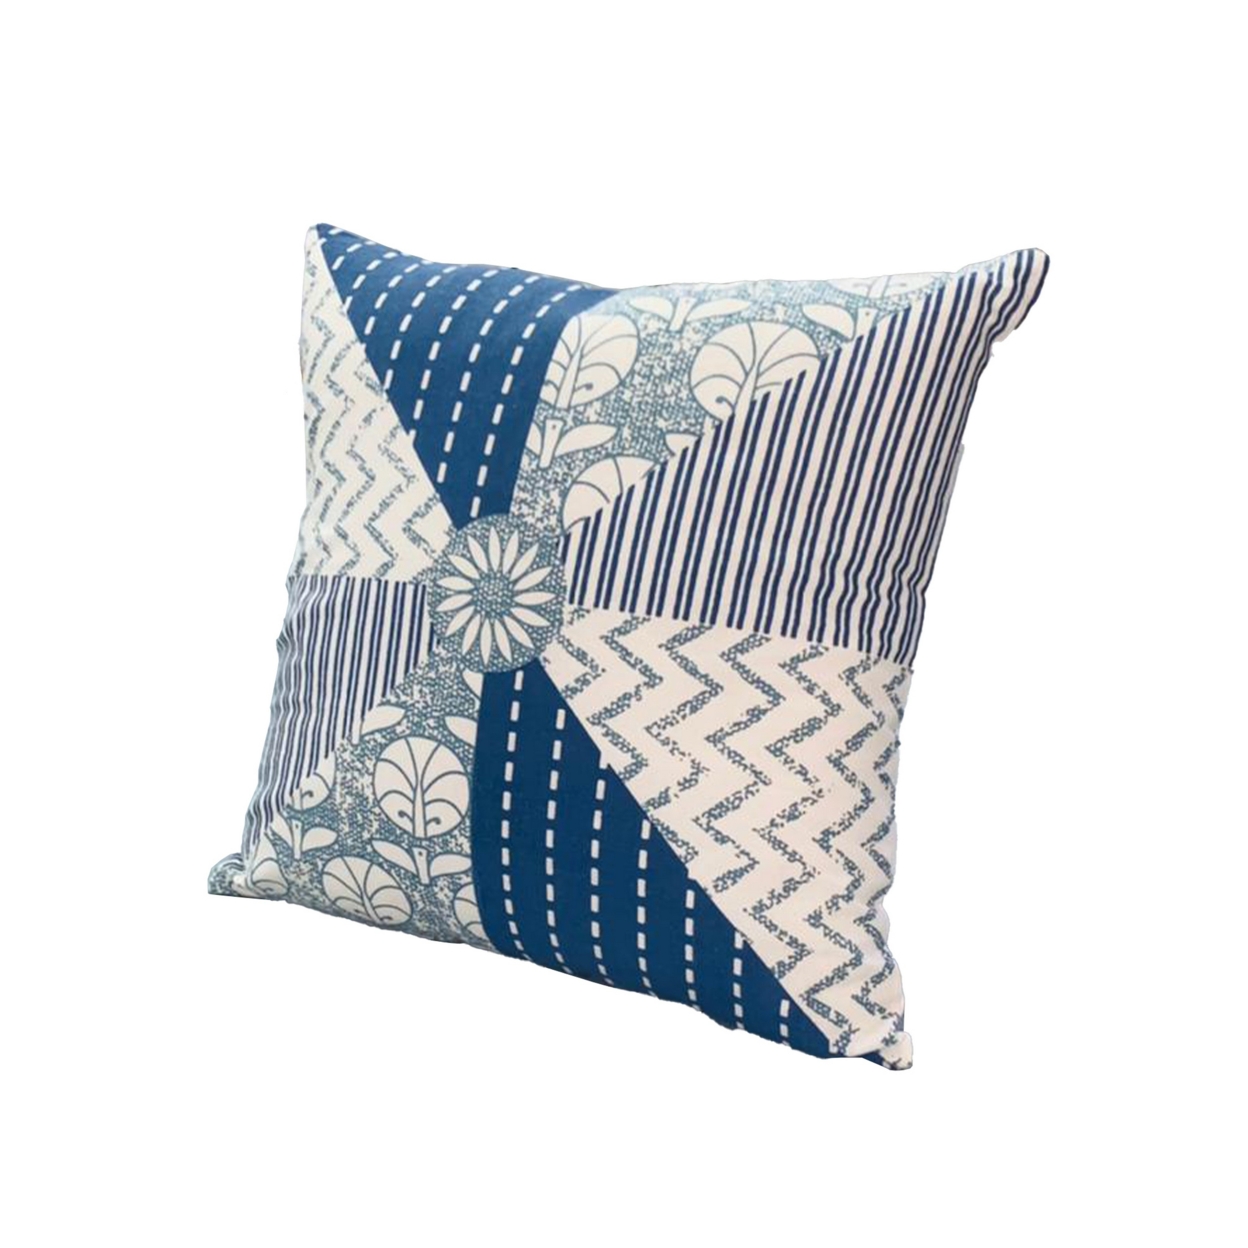 18 X 18 Square Accent Pillow, Geometric Pattern, Soft Cotton Cover, Polyester Filler, Blue, White- Saltoro Sherpi